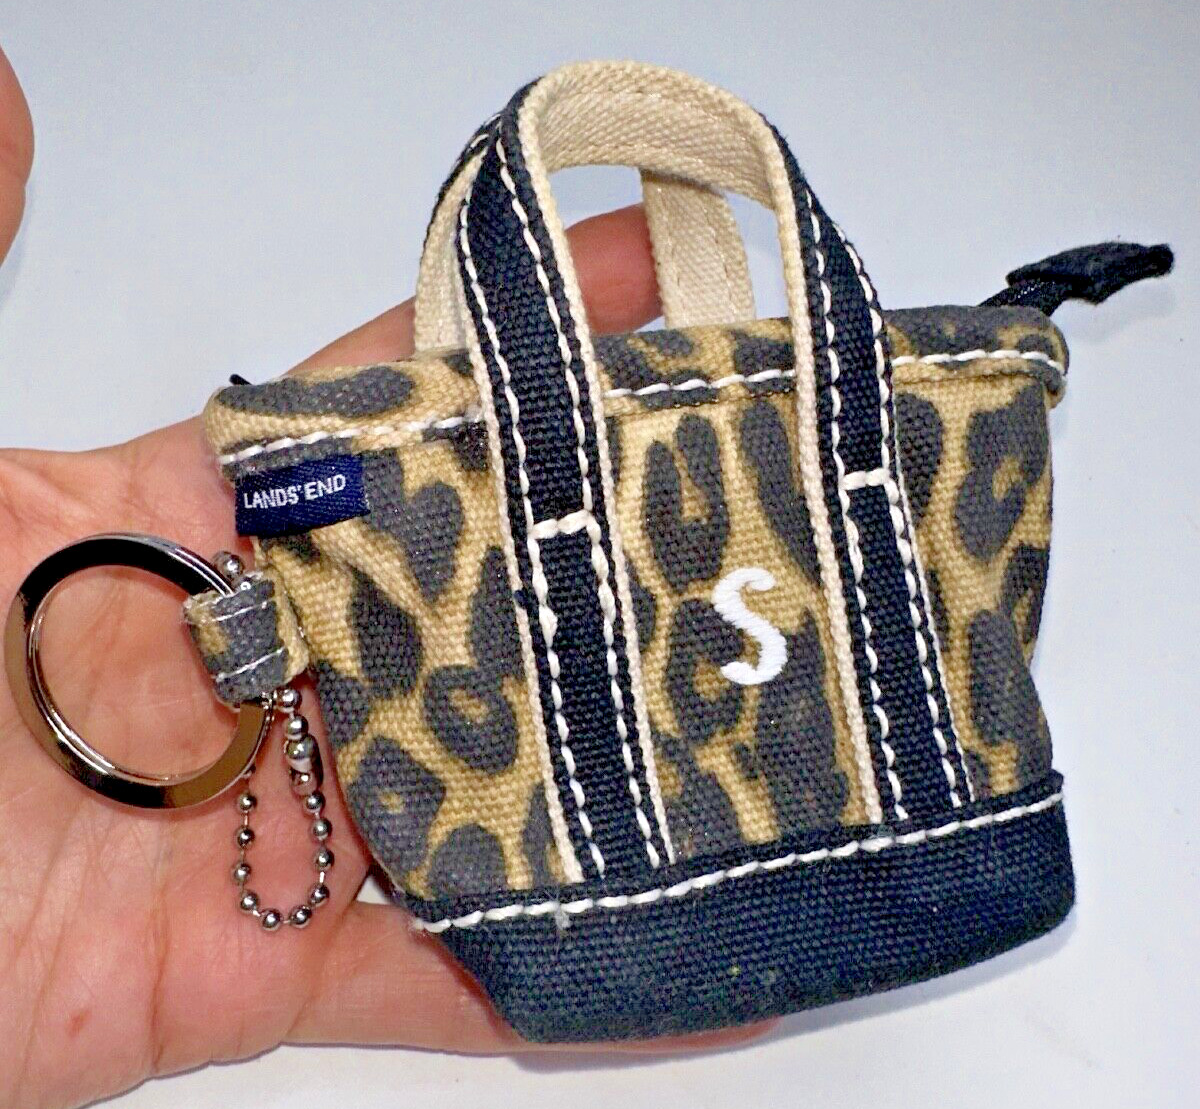 Lands End Keychain Tote Bag Leopard Print Cheetah Initial S Zipper